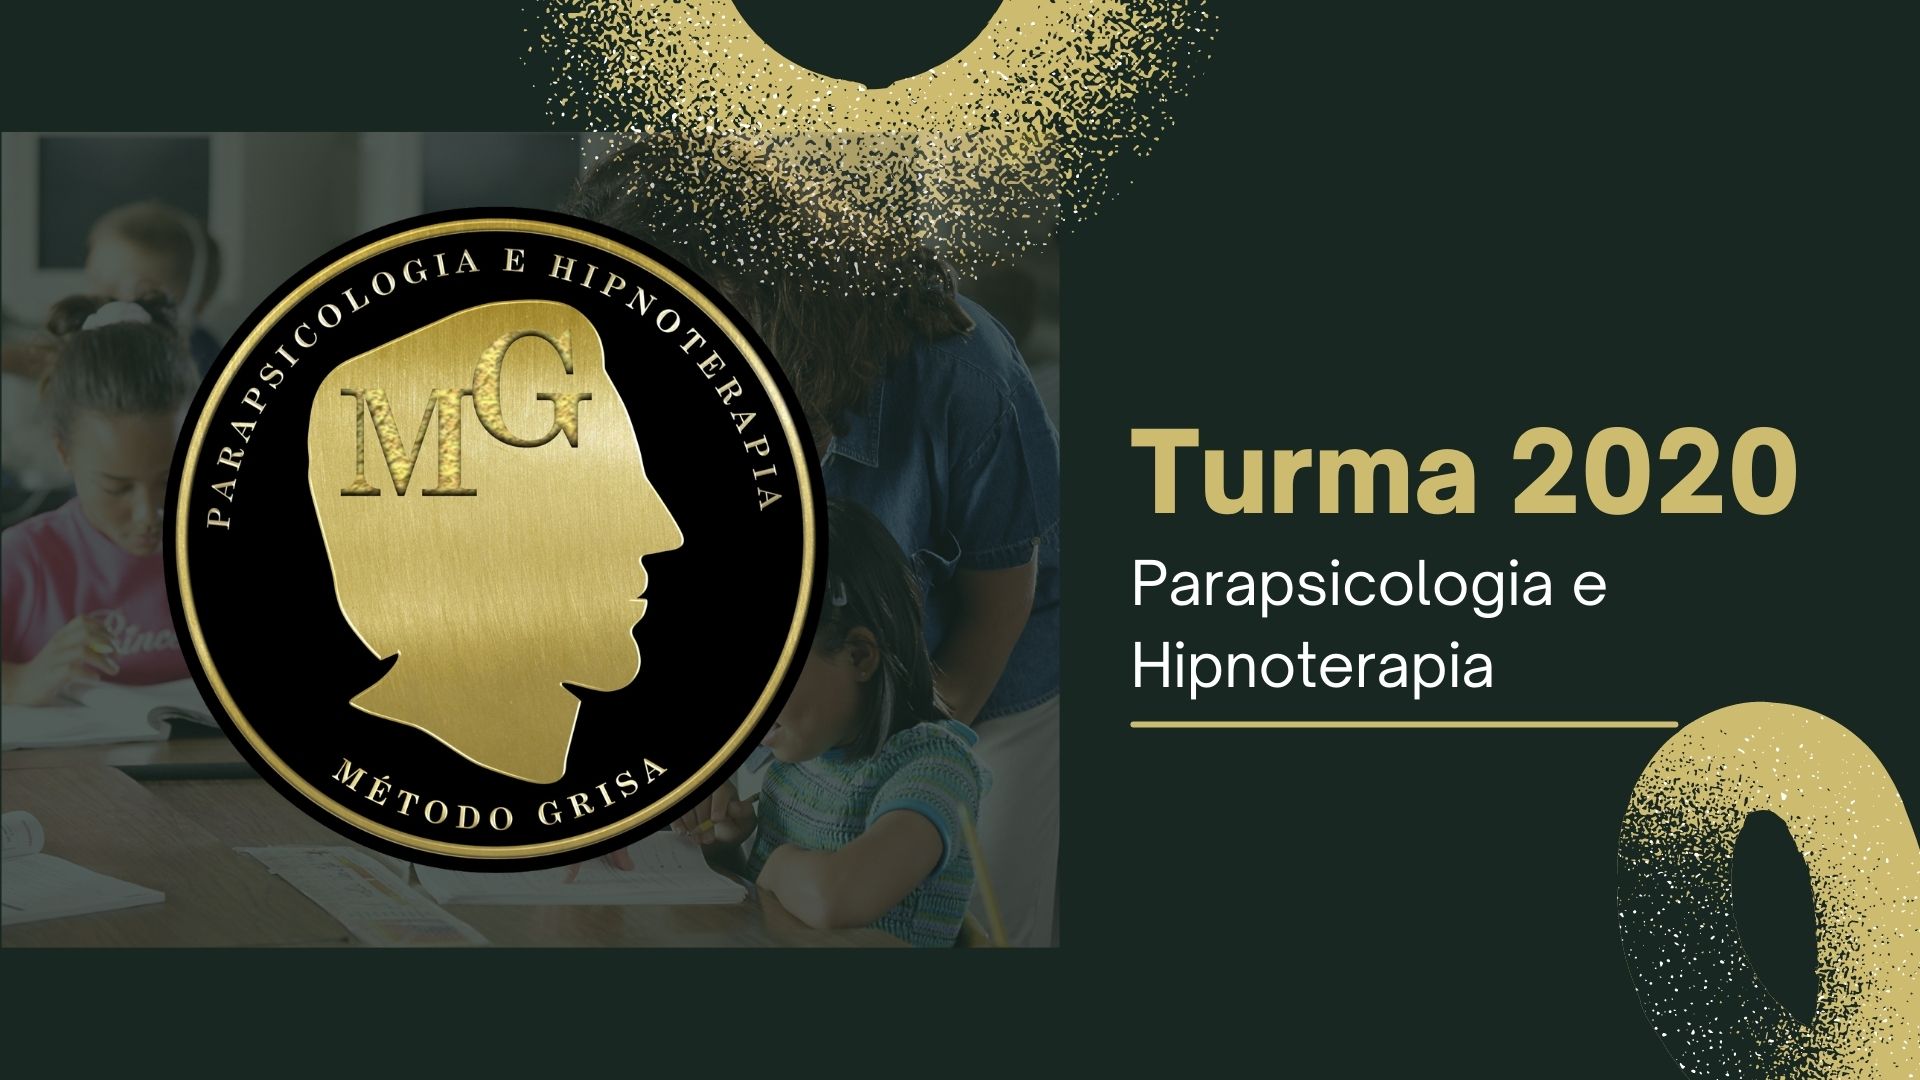 Parapsicologia e Hipnoterapia Turma 2020